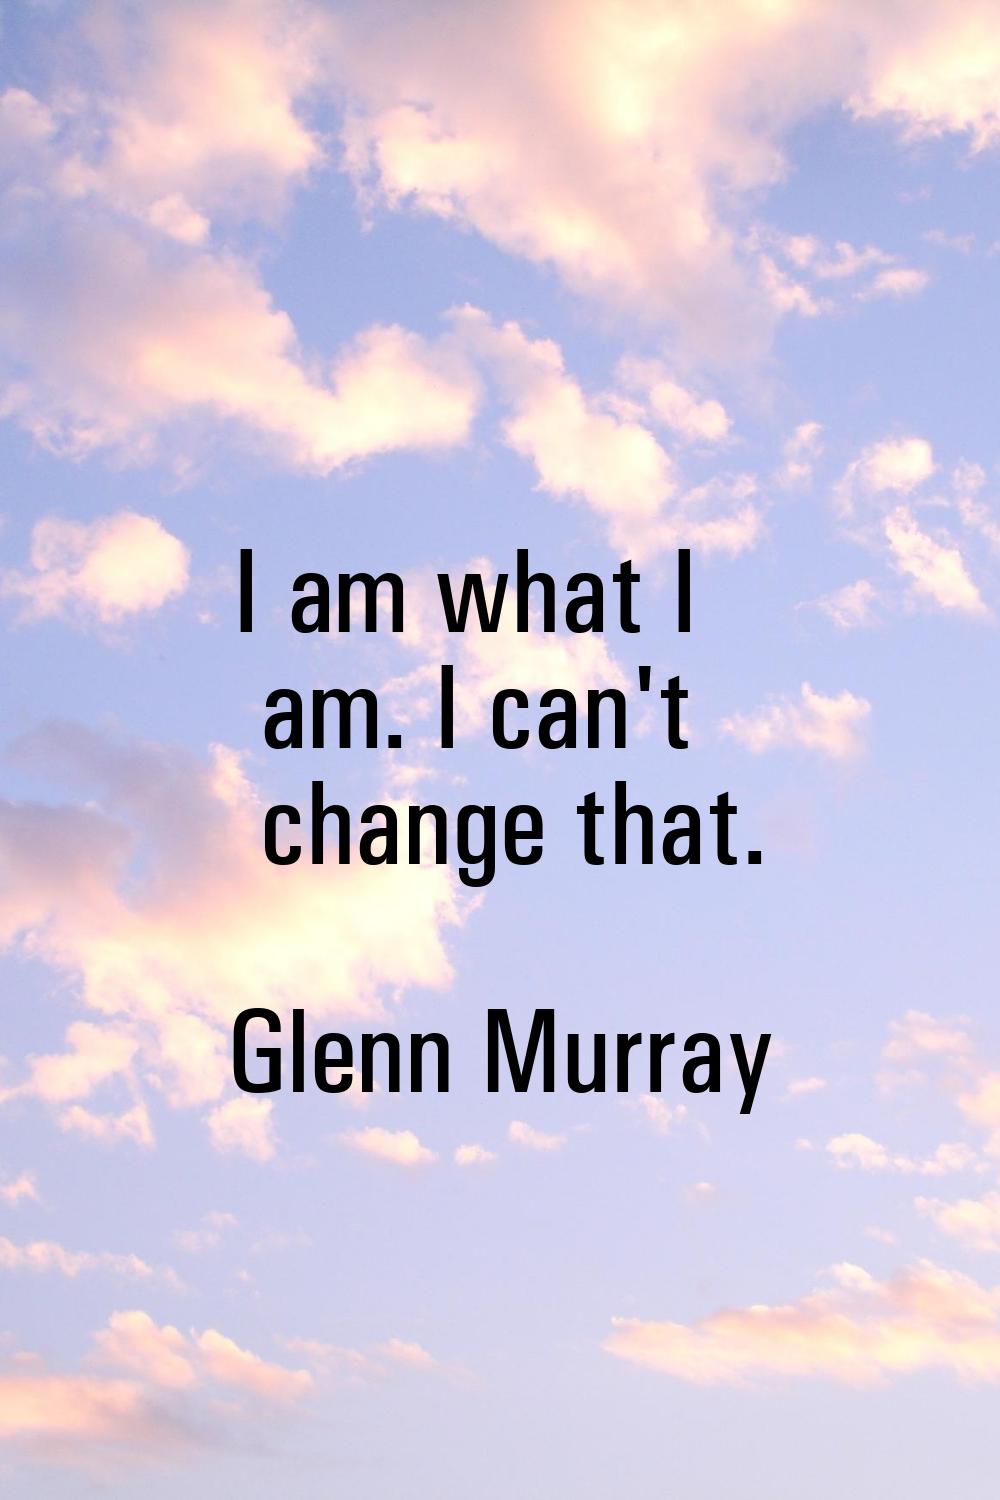 I am what I am. I can't change that.